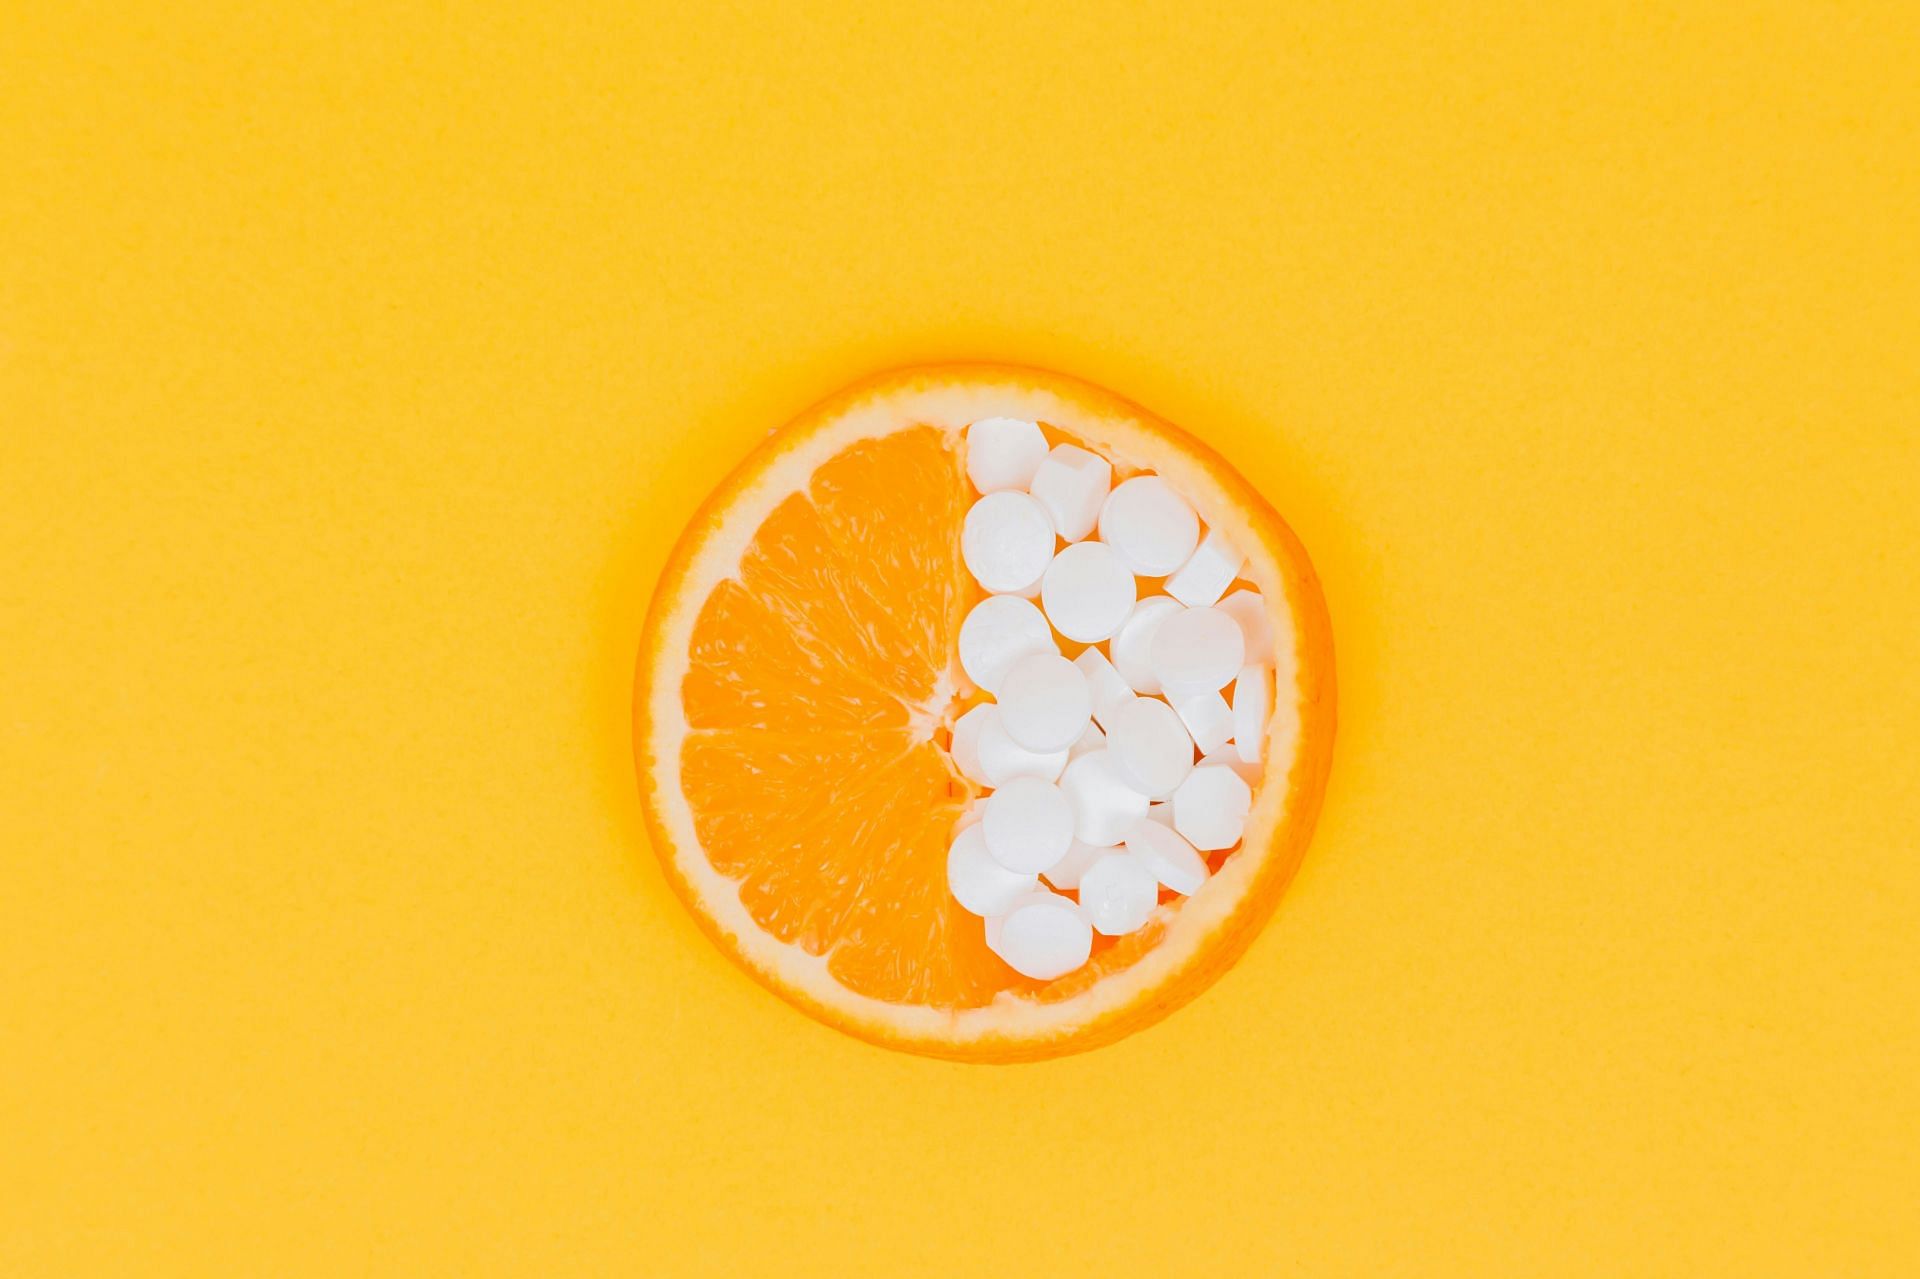 Camu camu has more Vitamin C than oranges and supplements (Image by Diana Polekhina/Unsplash)